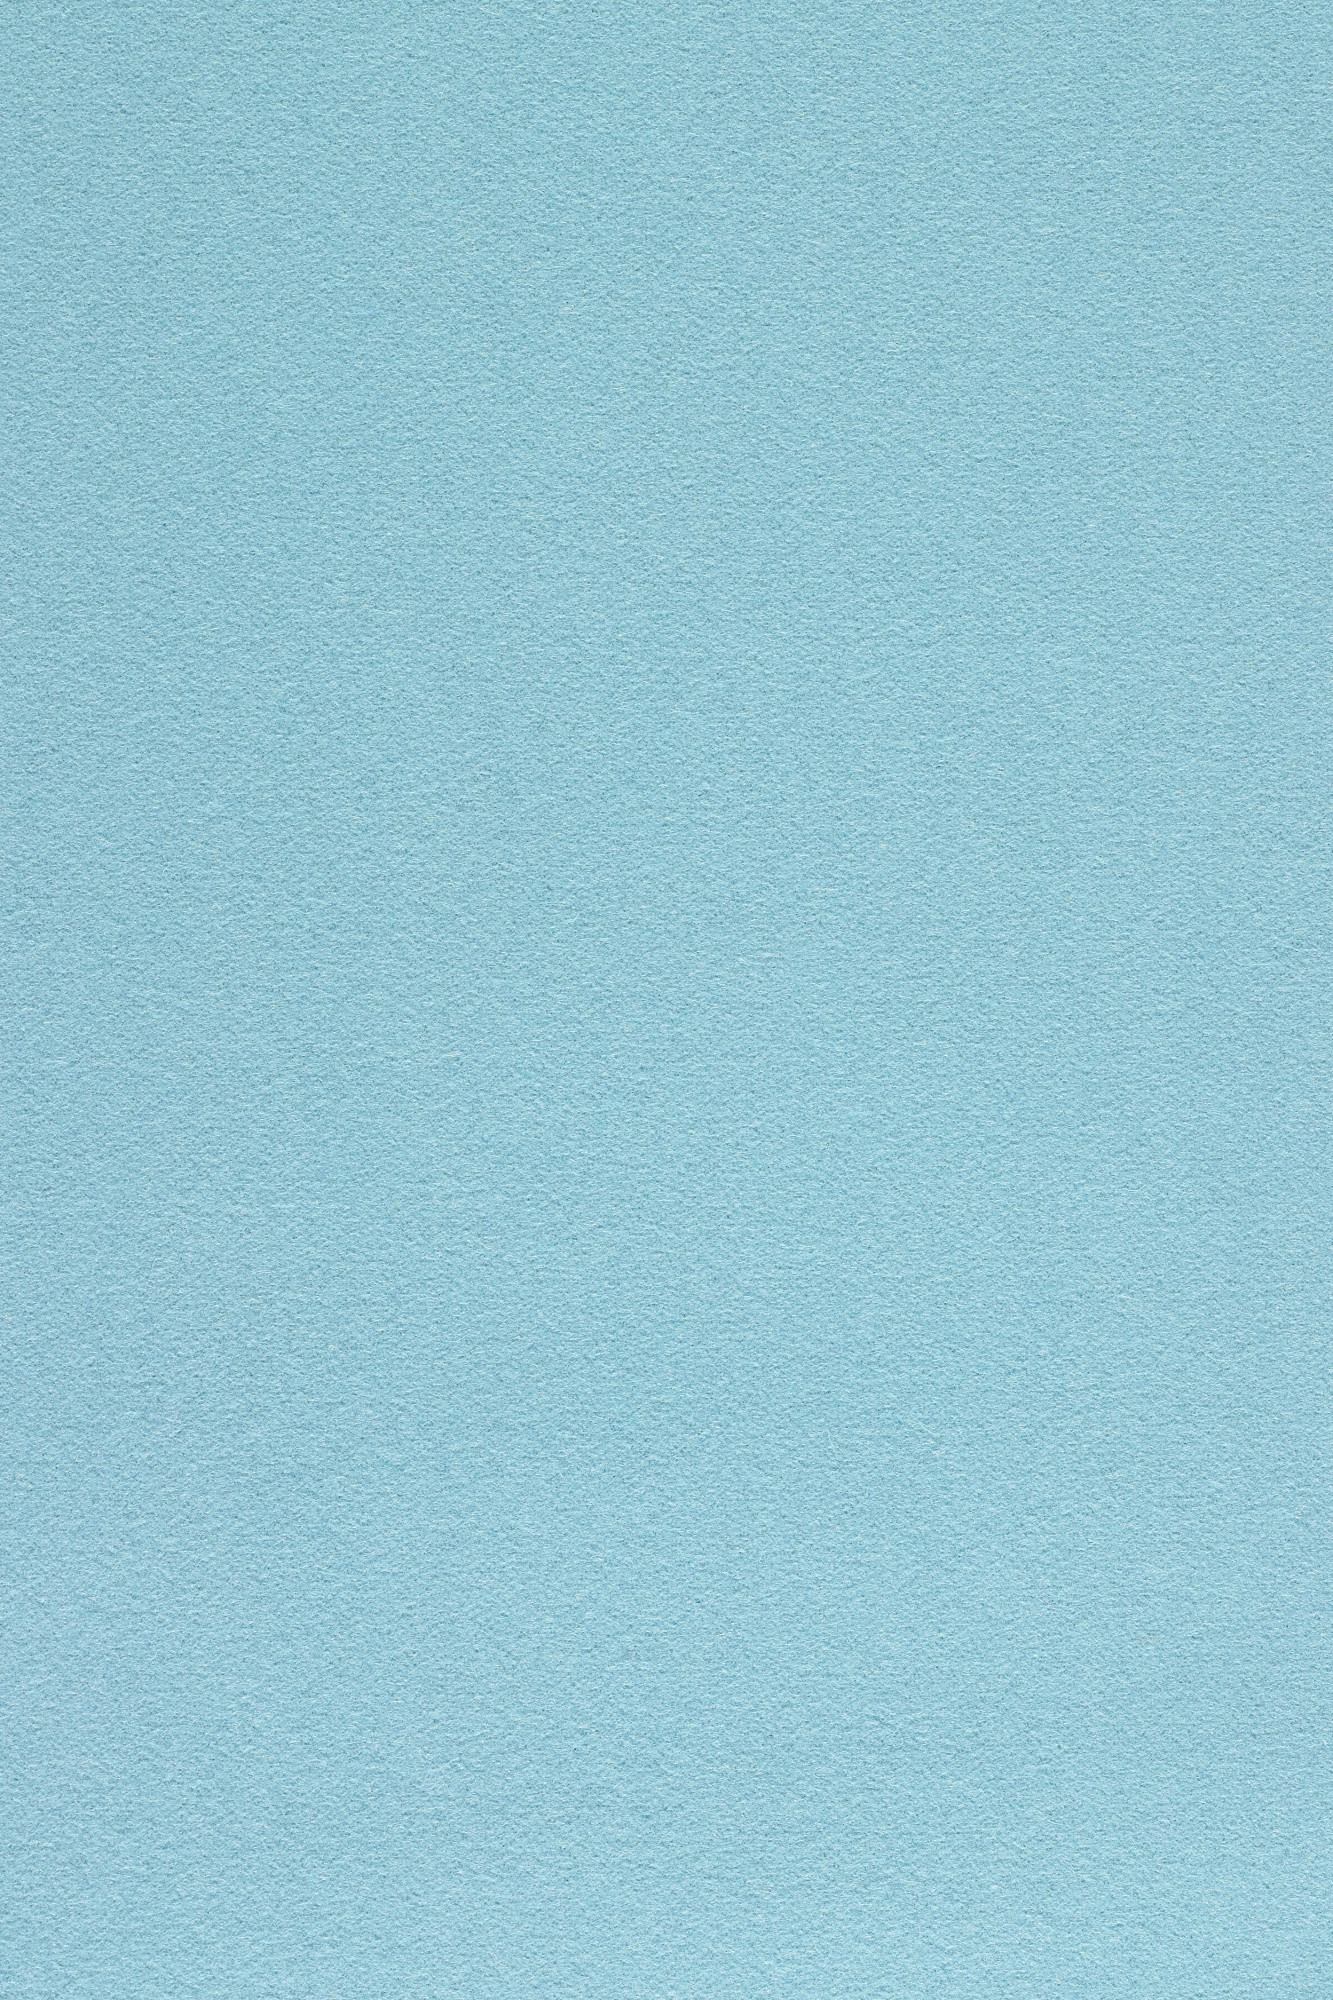 Fabric sample Divina 3 836 blue